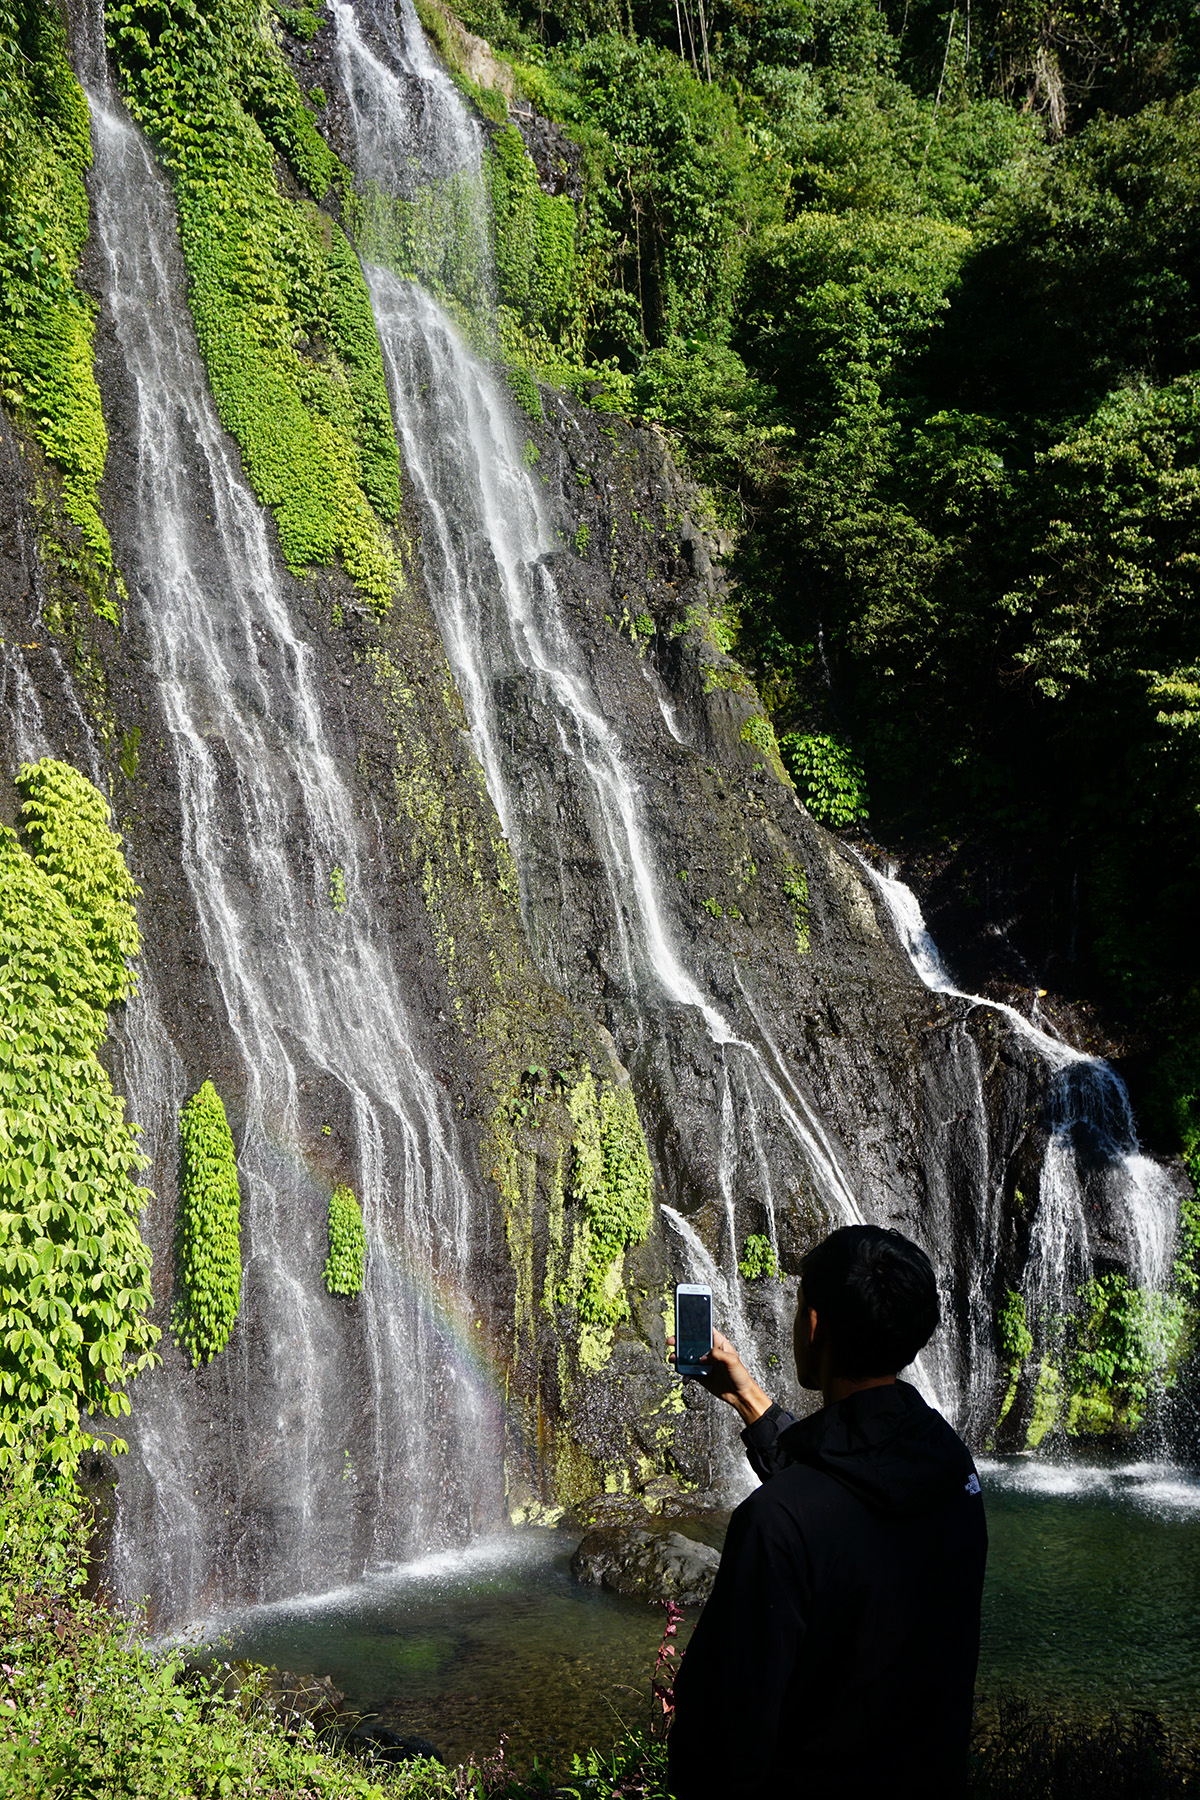 Seorang pengunjung mengabadikan keindahan air terjun Banyumala. Air terjun setinggi sekitar 20 meter ini terletak di lembah Desa Wanagiri. Foto : Ahmad Muzakky/Mongabay Indonesia